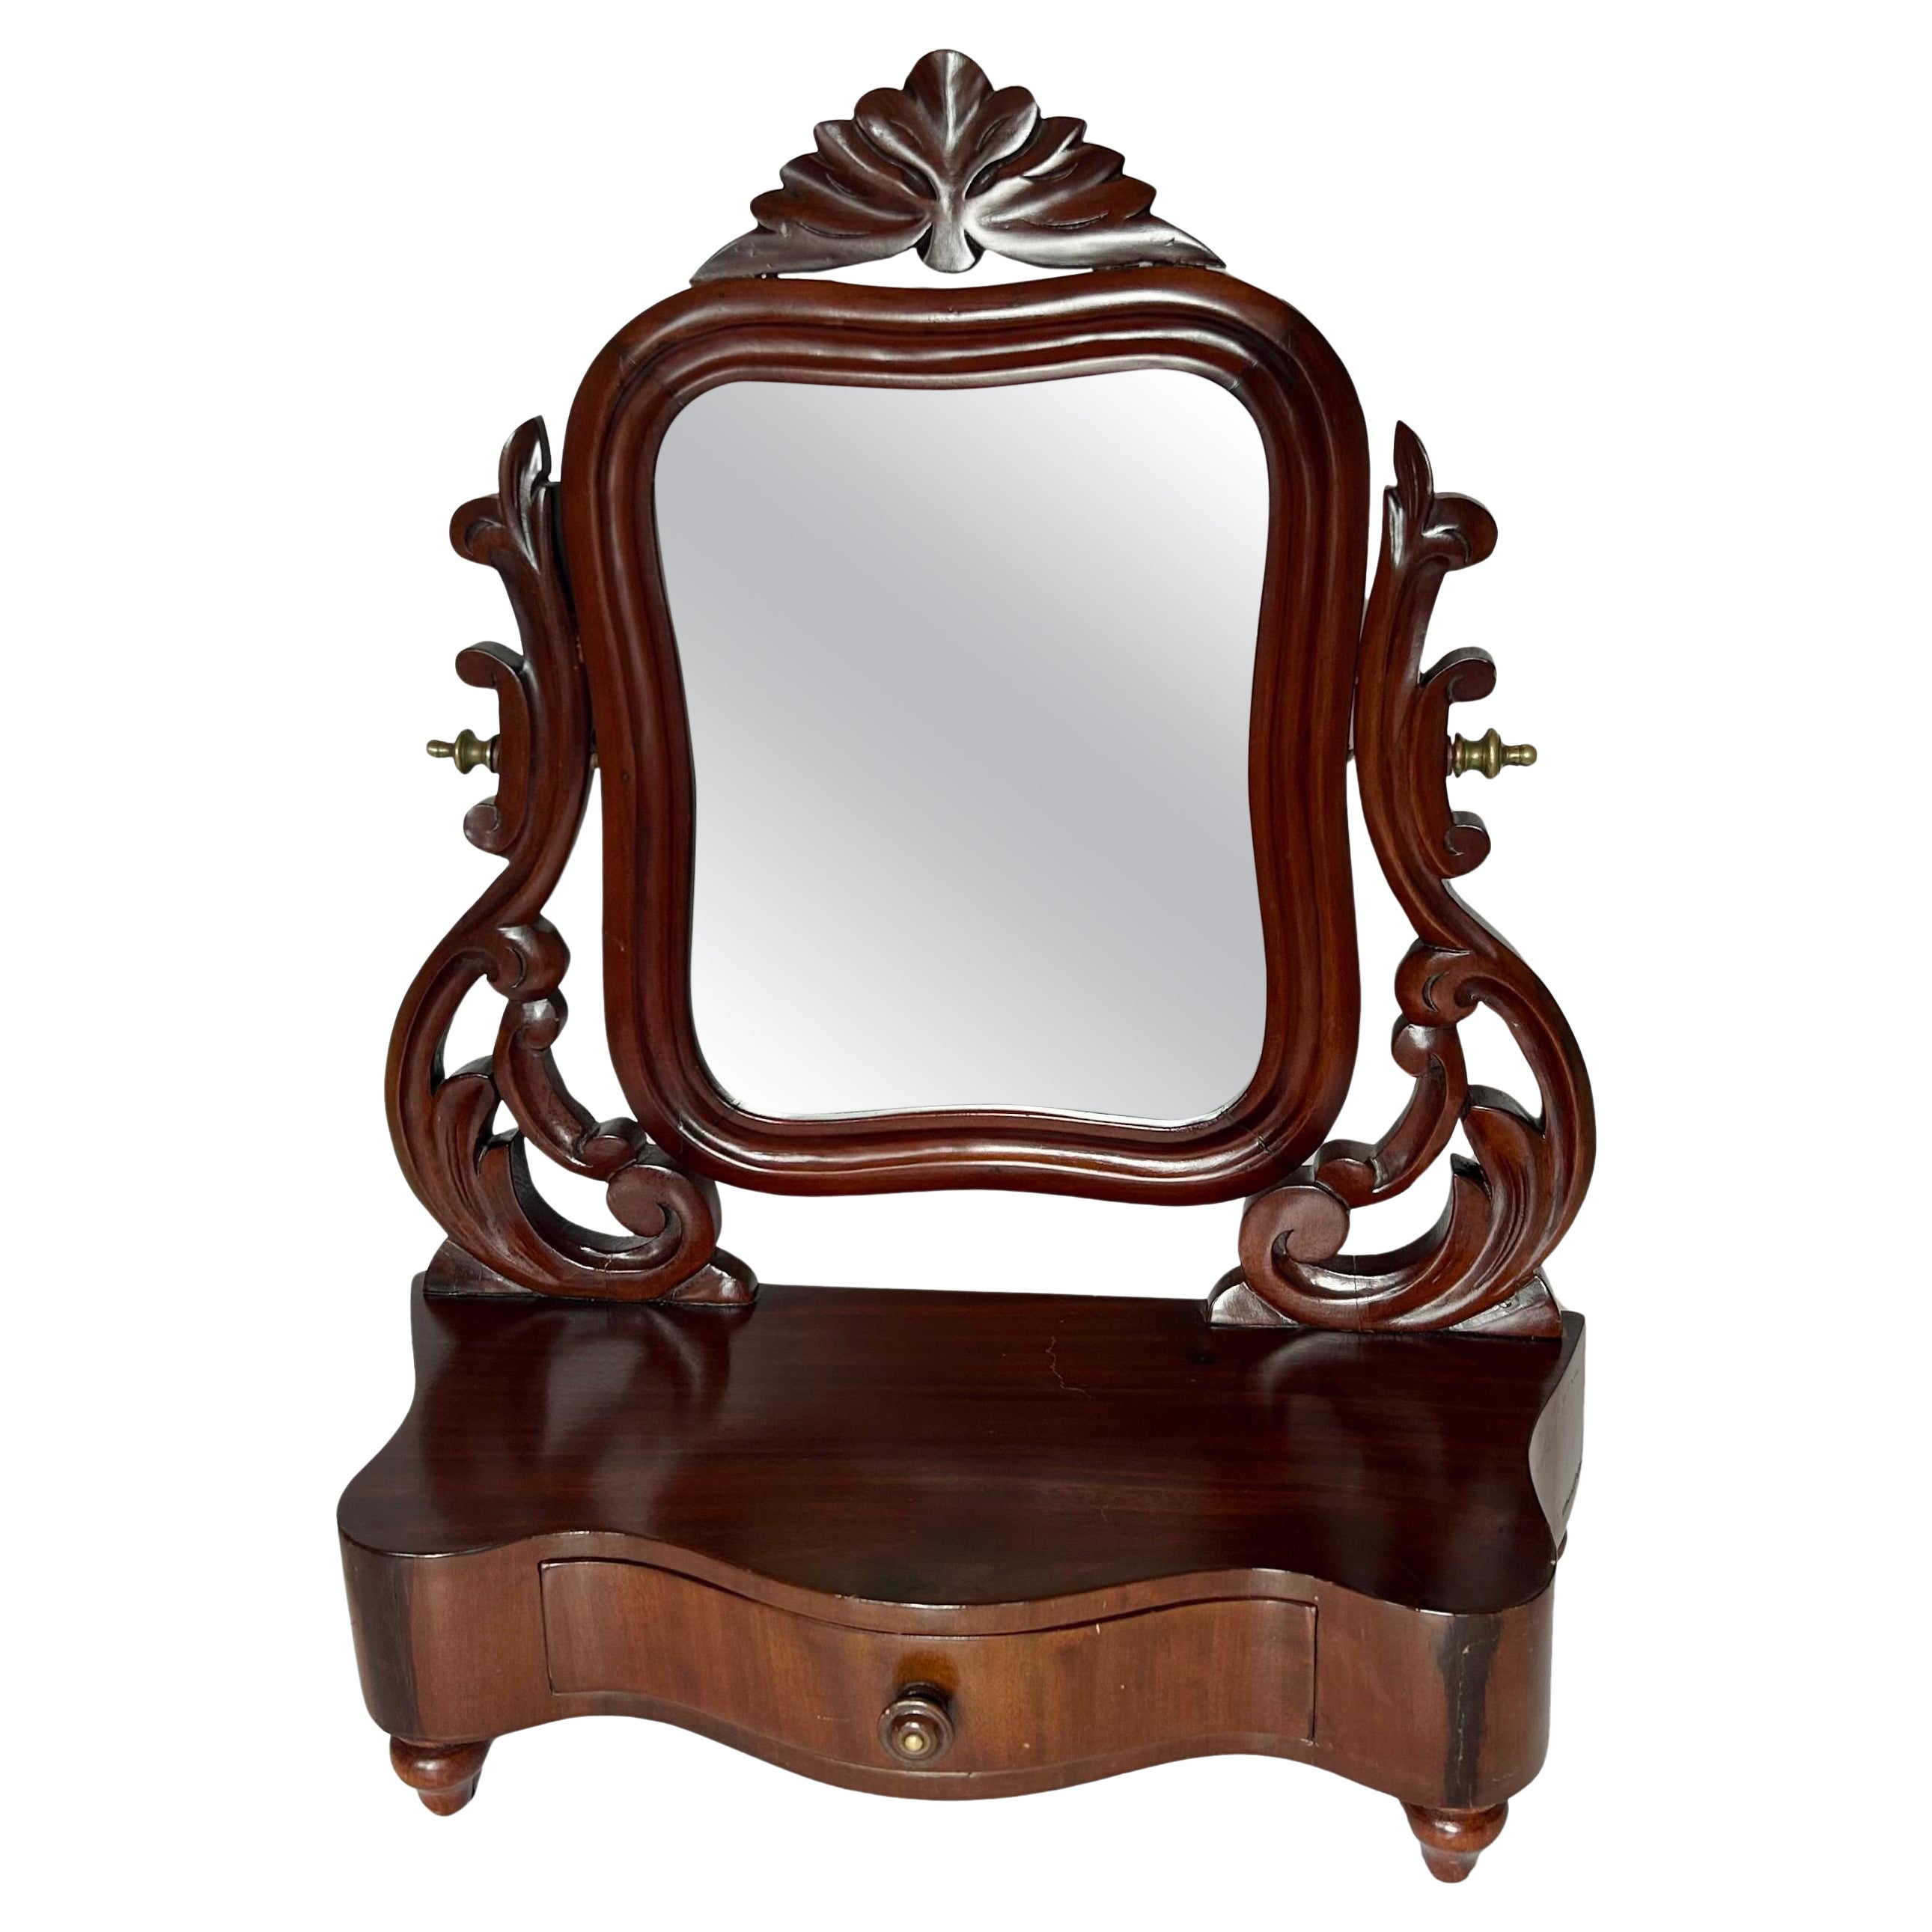  Lady's Mahogany Dressing Mirror, Circa 1850, from Portugal